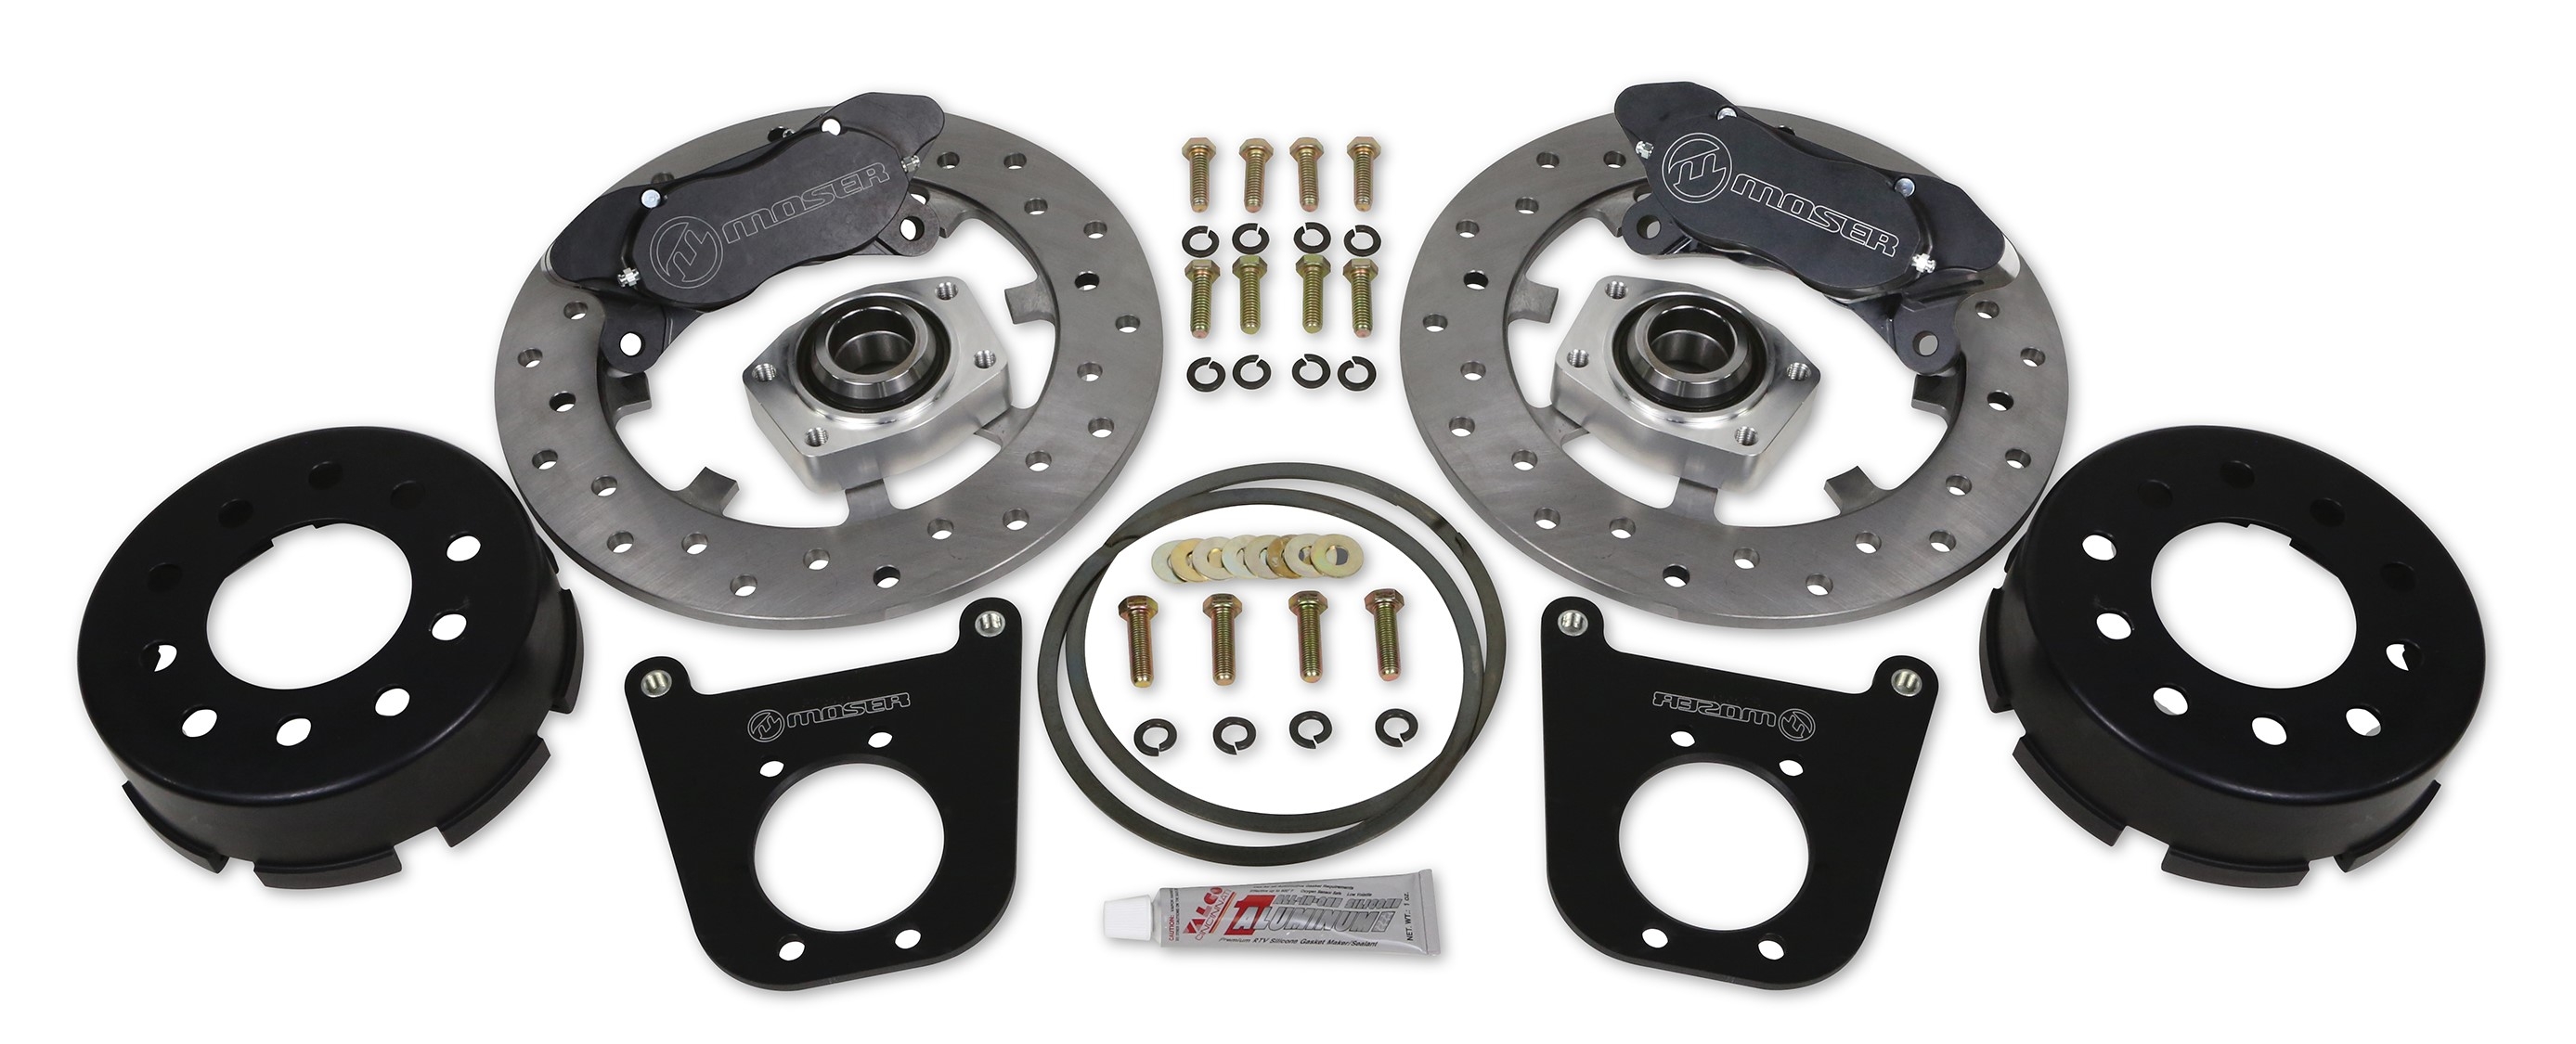 Part # 6200-129XX -Moser Engineering Rear Drag Brake & Eliminator Kit